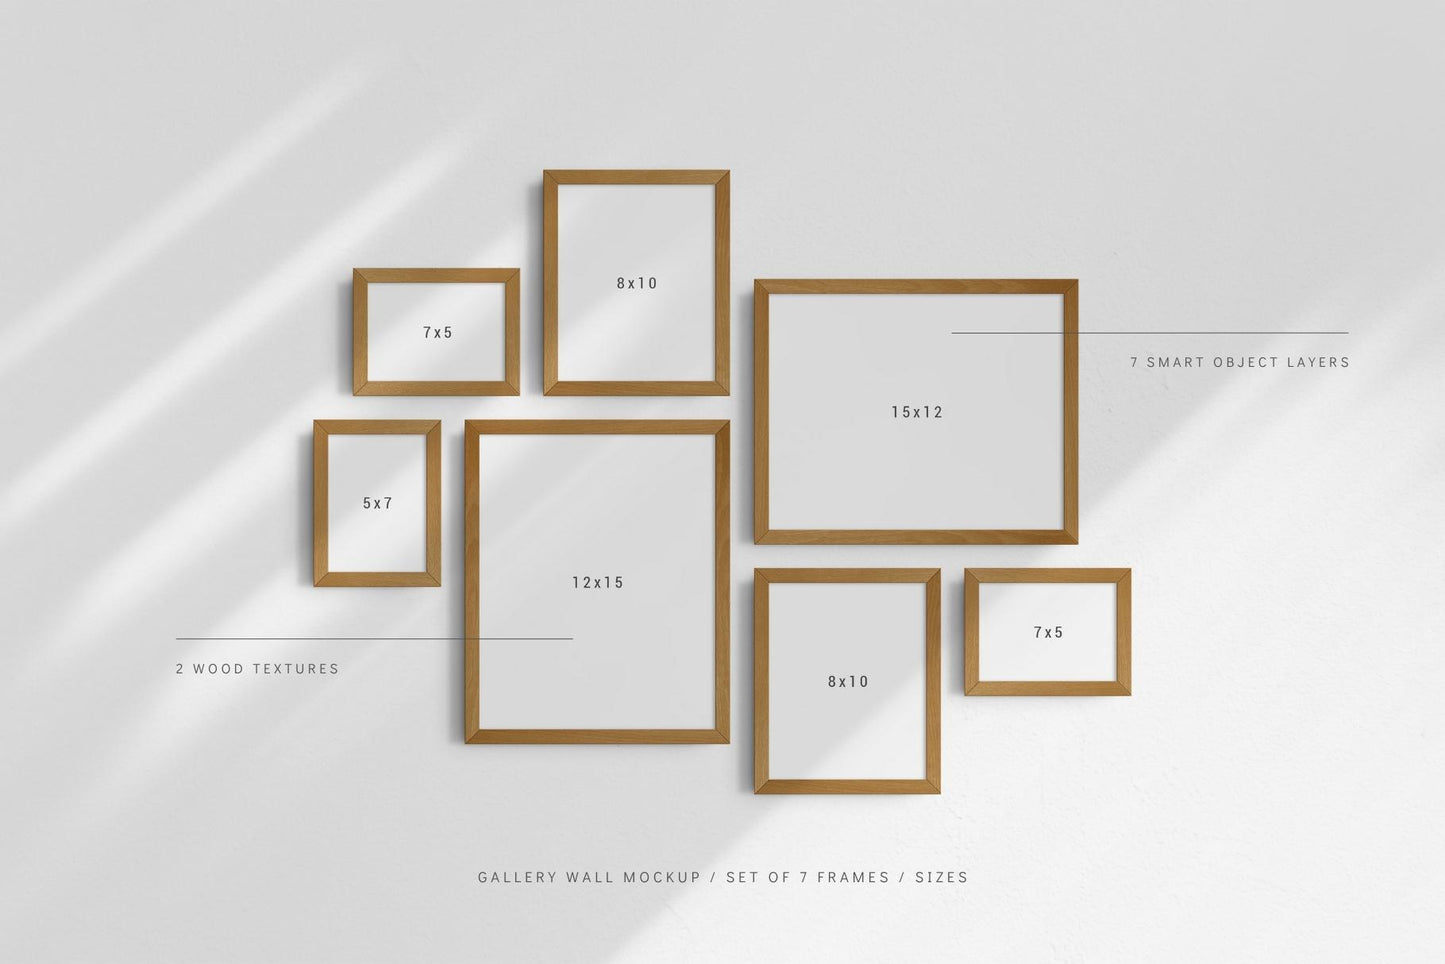 Gallery Wall Mockup | Set of 7 Frames | Frame Mockup | PSD | Sizes